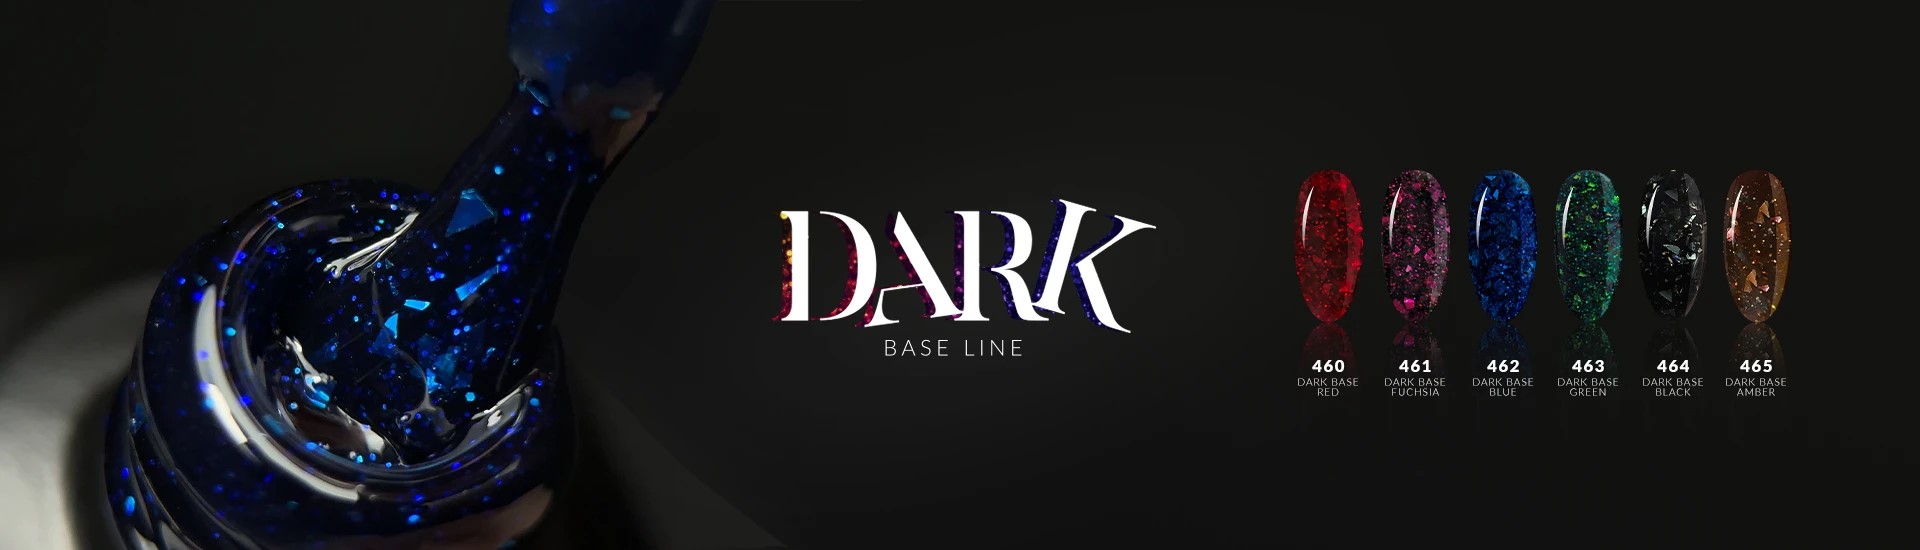 Dark Base Cover Line - Green Treasures